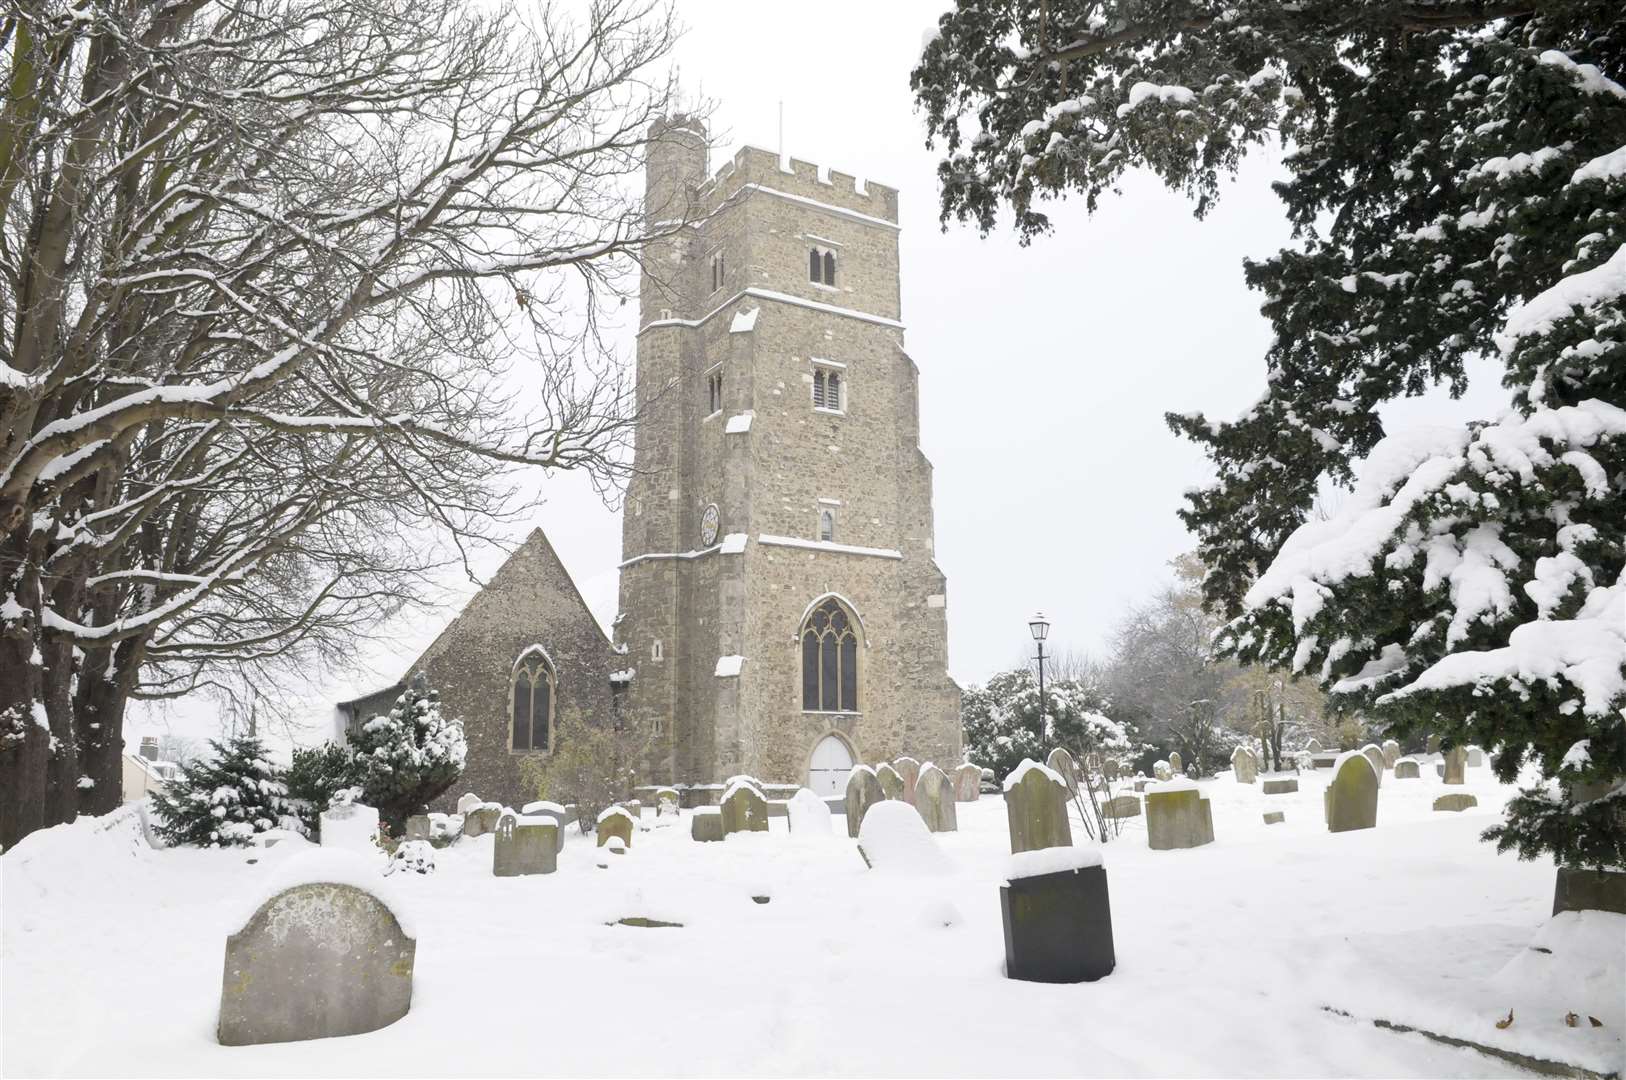 Snow in Kent in December 2010